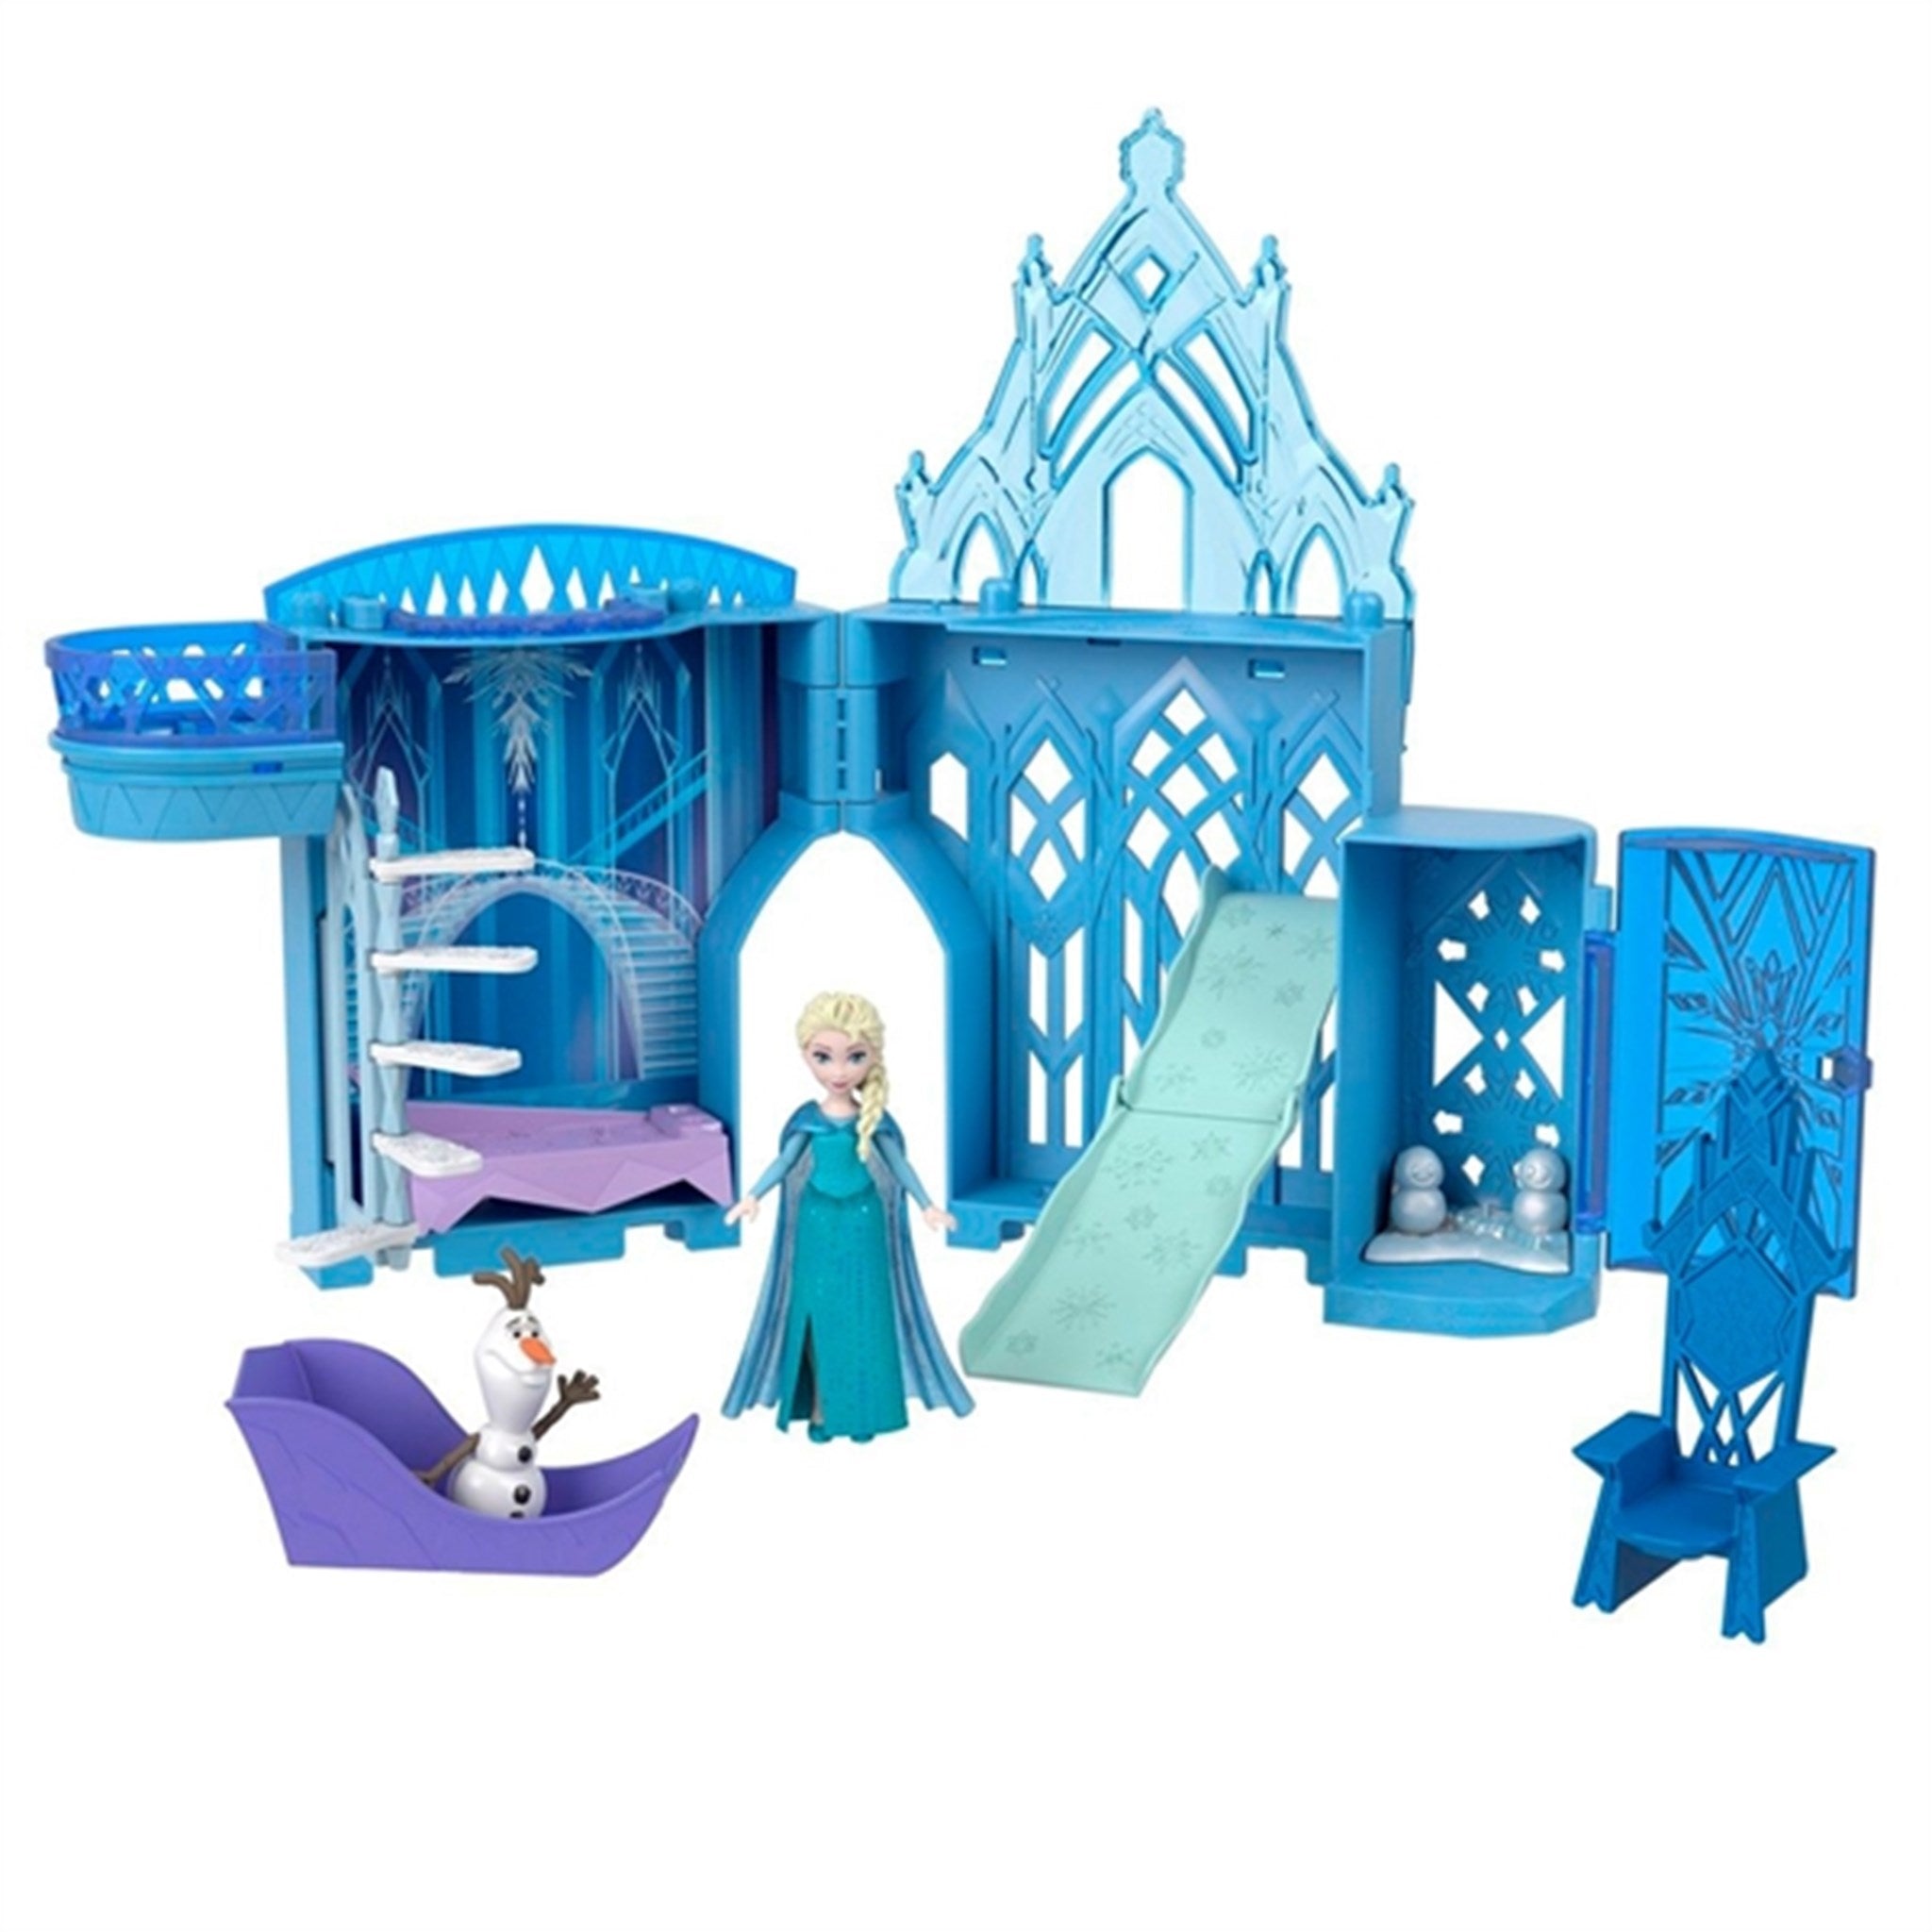 Disney Frozen Elsa's Ice Castle Playset